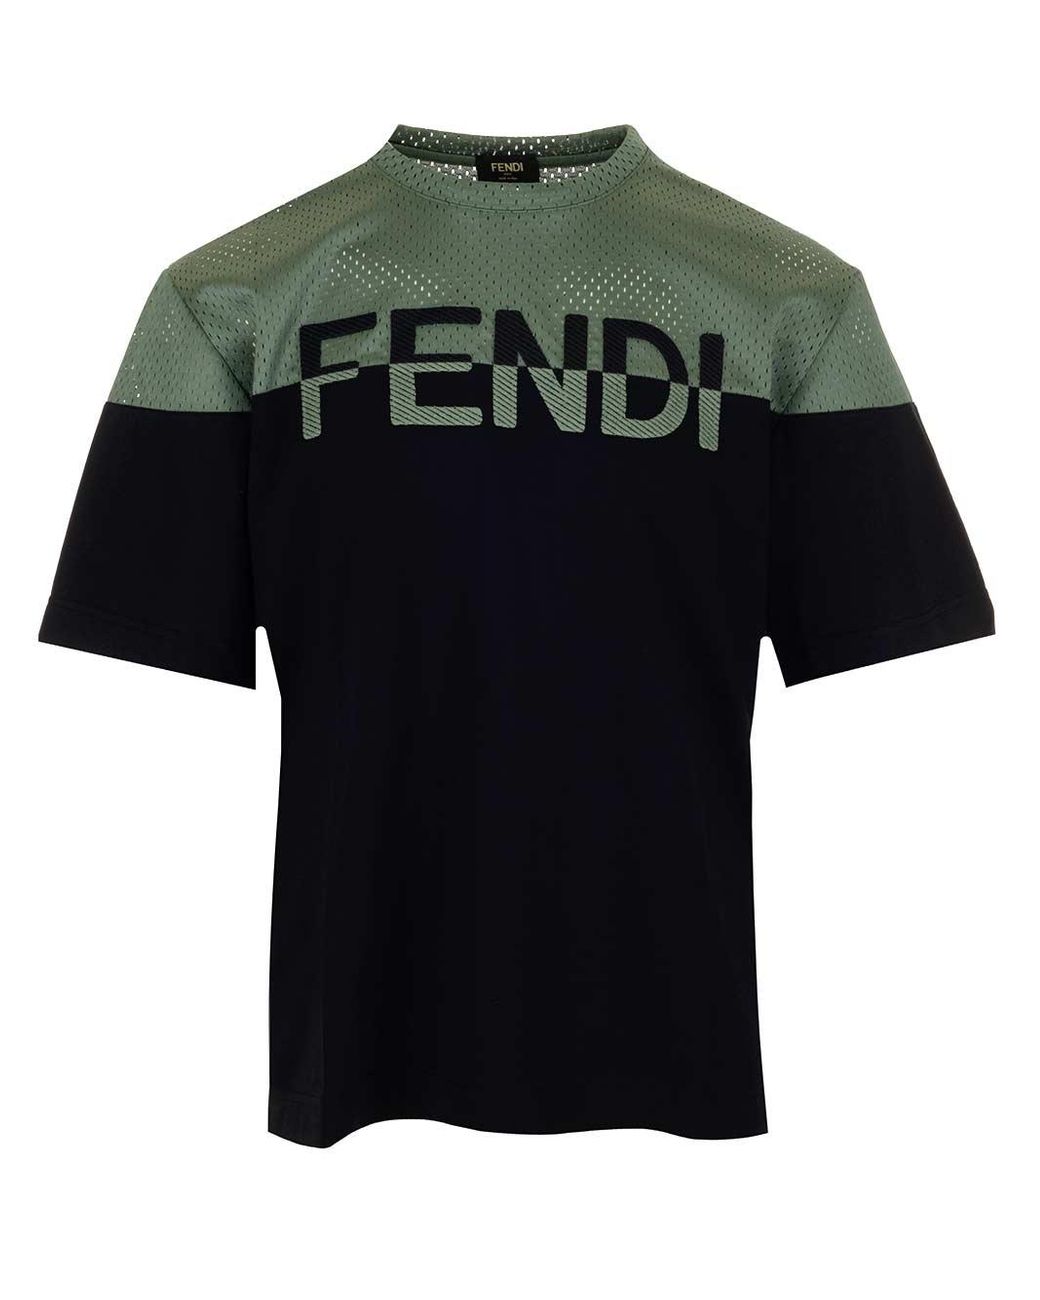 Fendi Cotton Logo Embroidered Mesh Detail T-shirt in Green for Men - Lyst